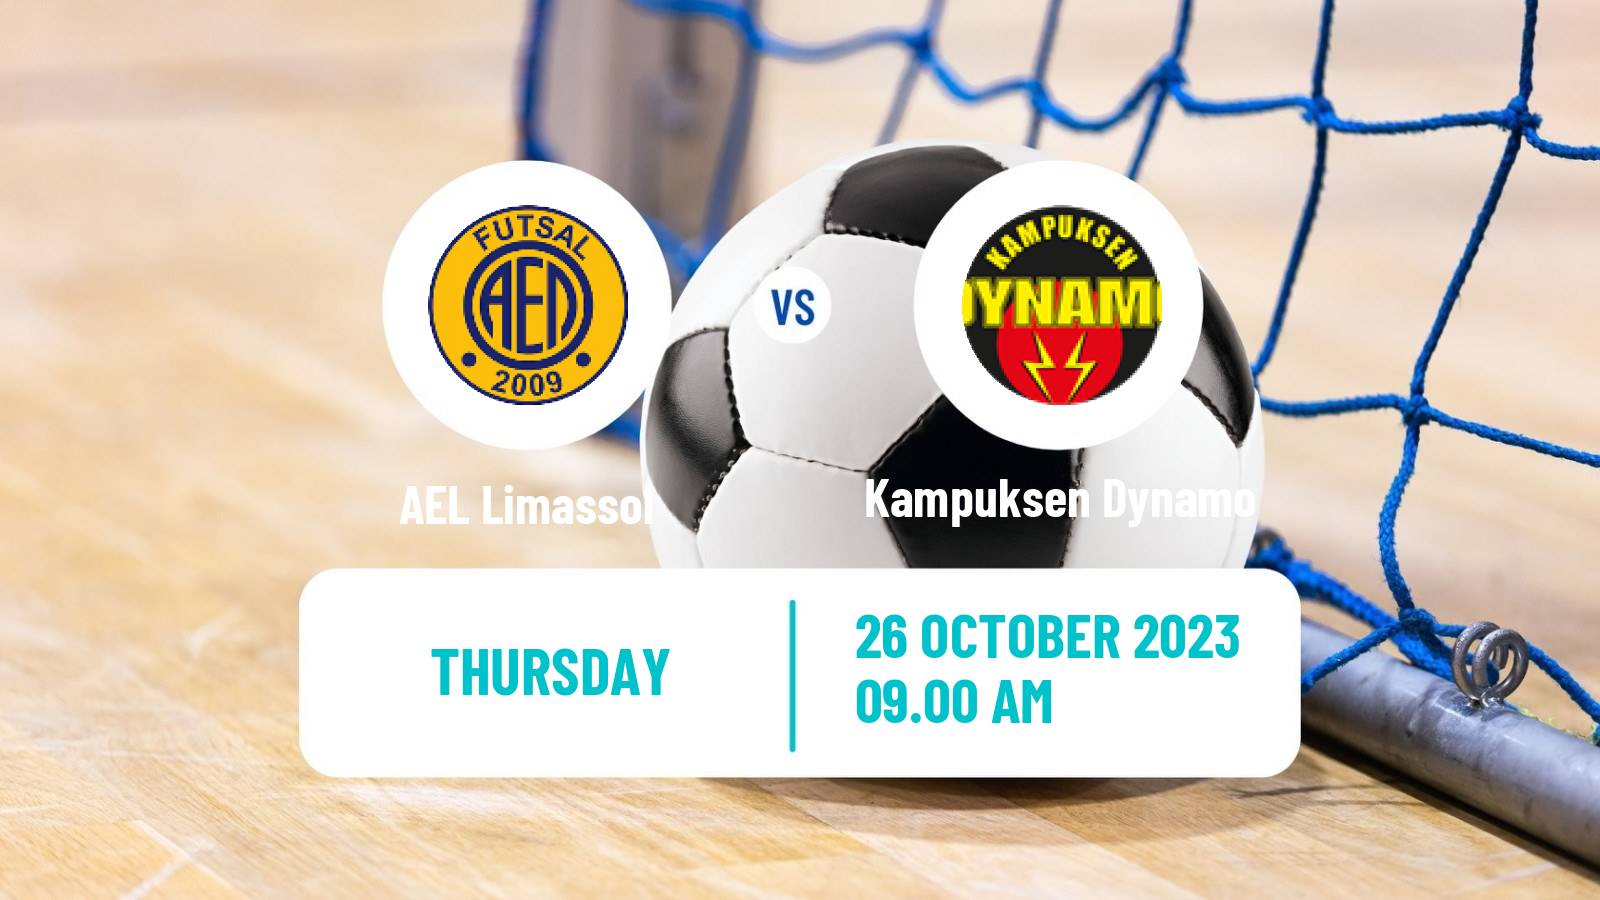 Futsal UEFA Futsal Champions League AEL Limassol - Kampuksen Dynamo